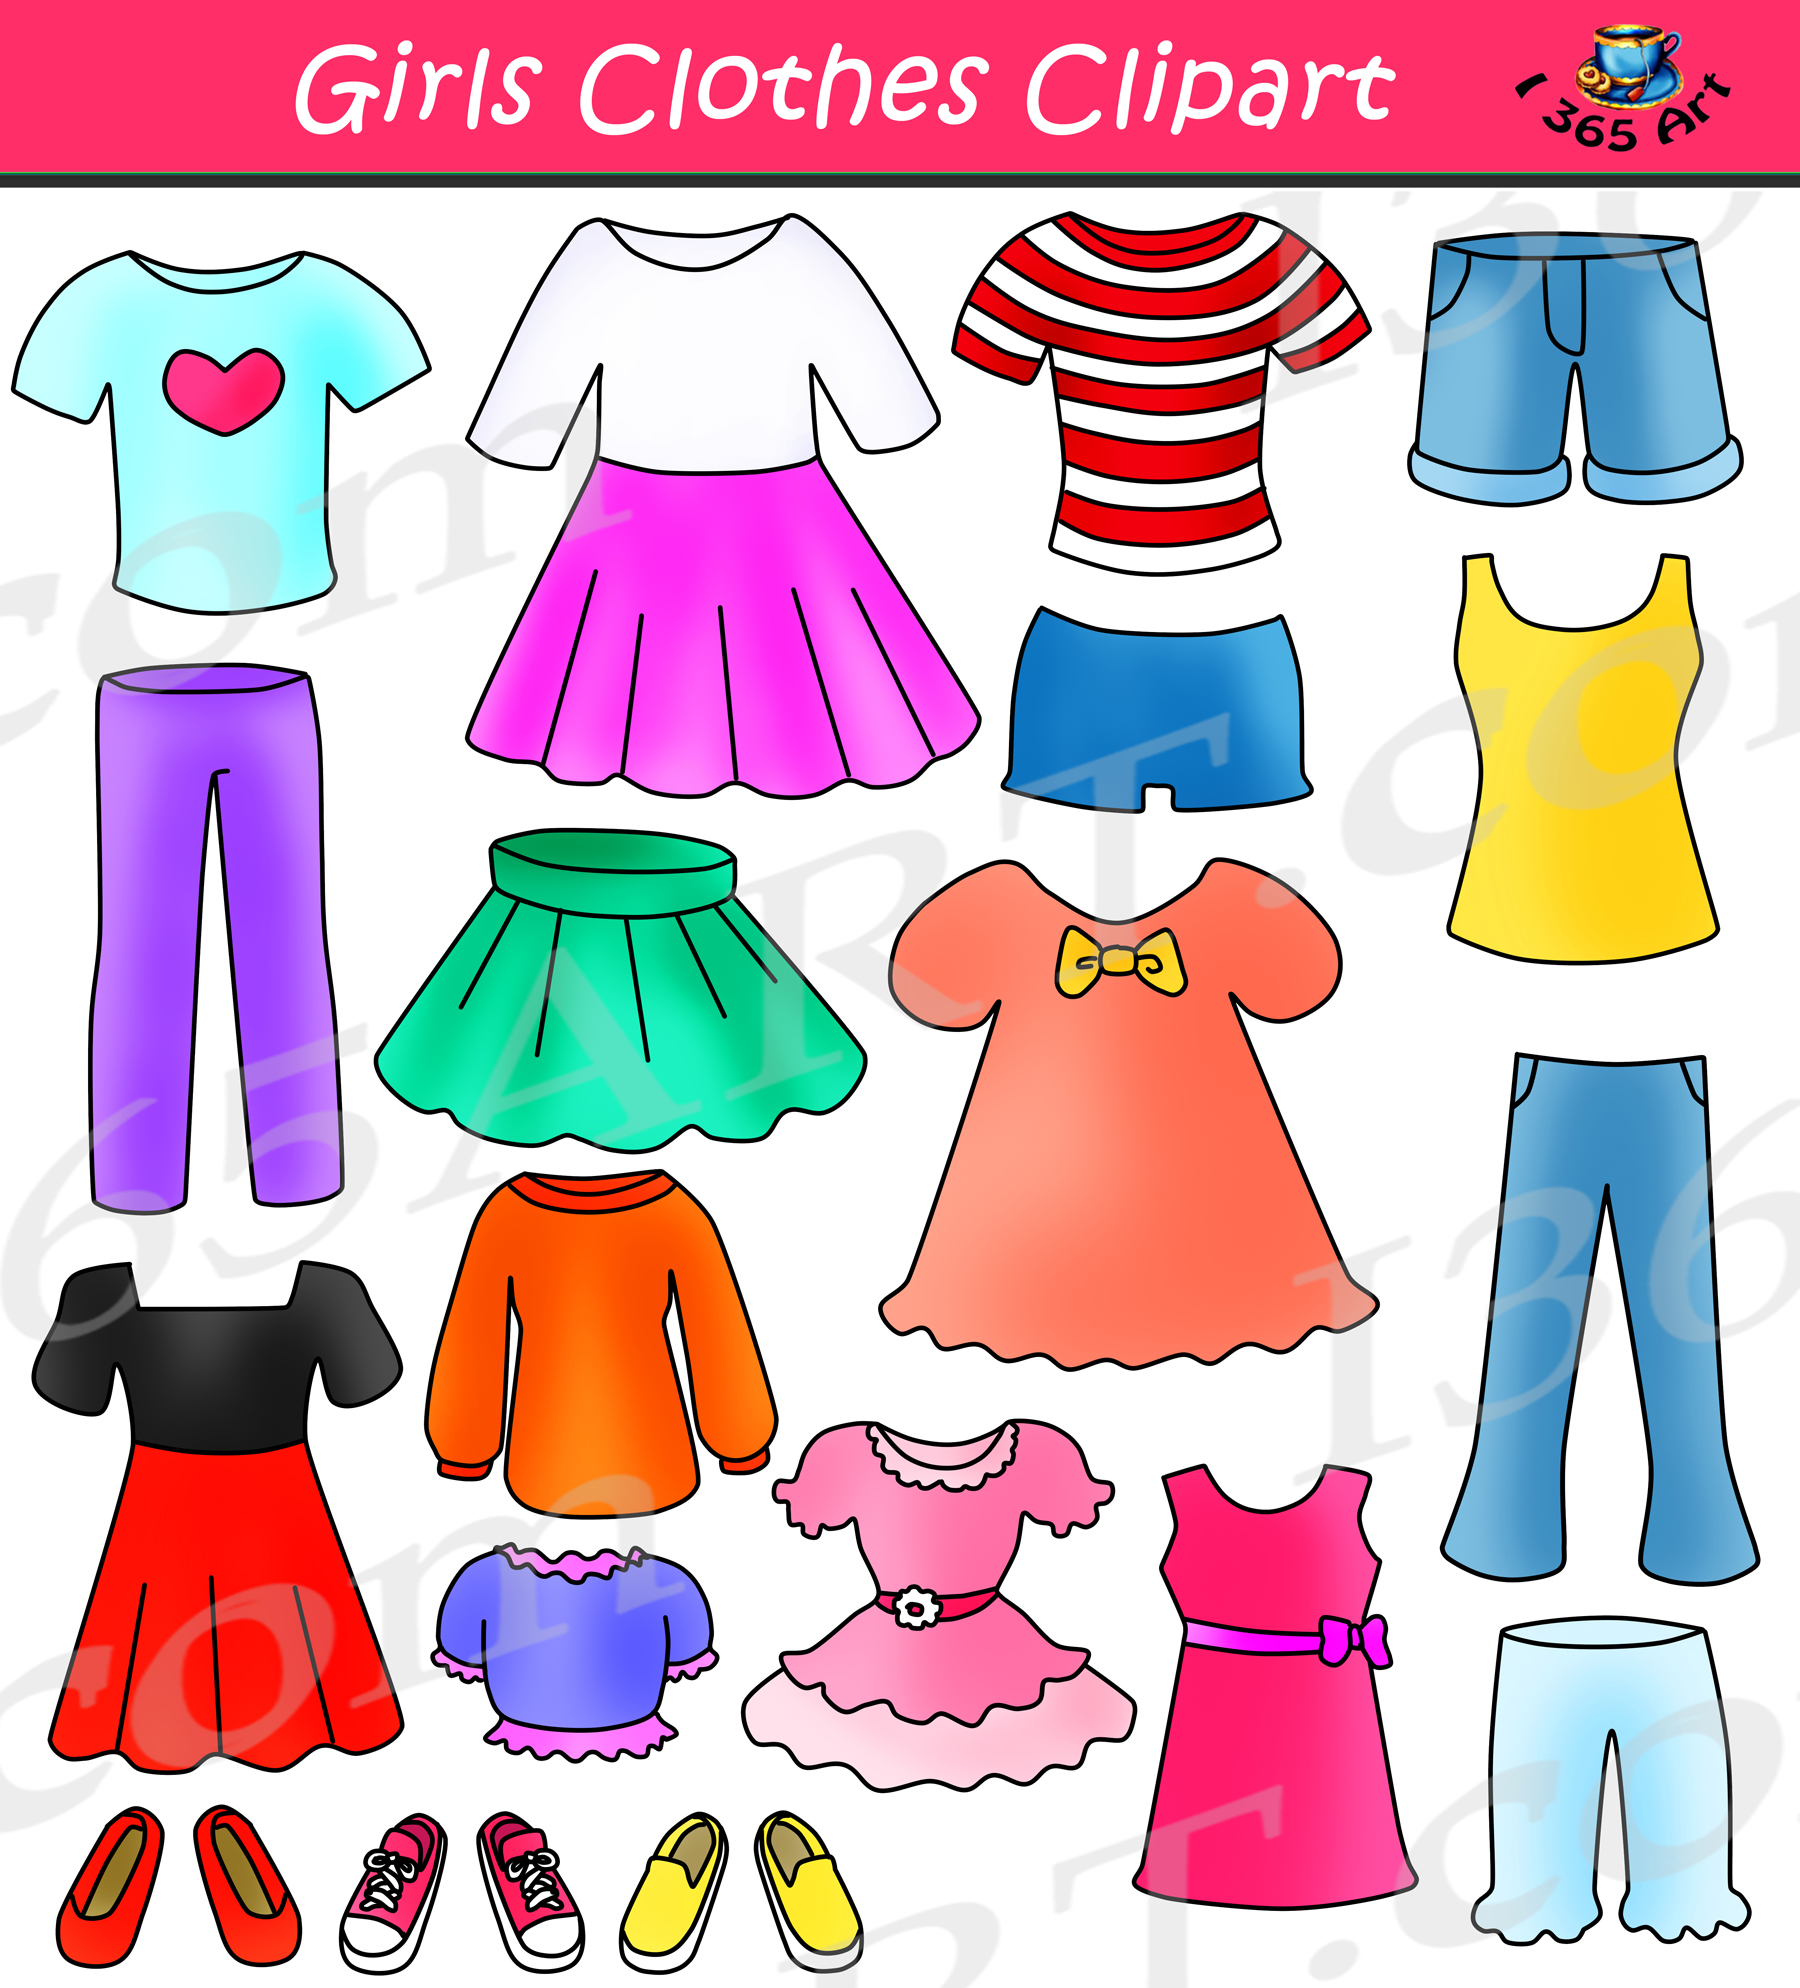 https://clipart4school.com/wp-content/uploads/2018/03/girls-clothes-preview.jpg